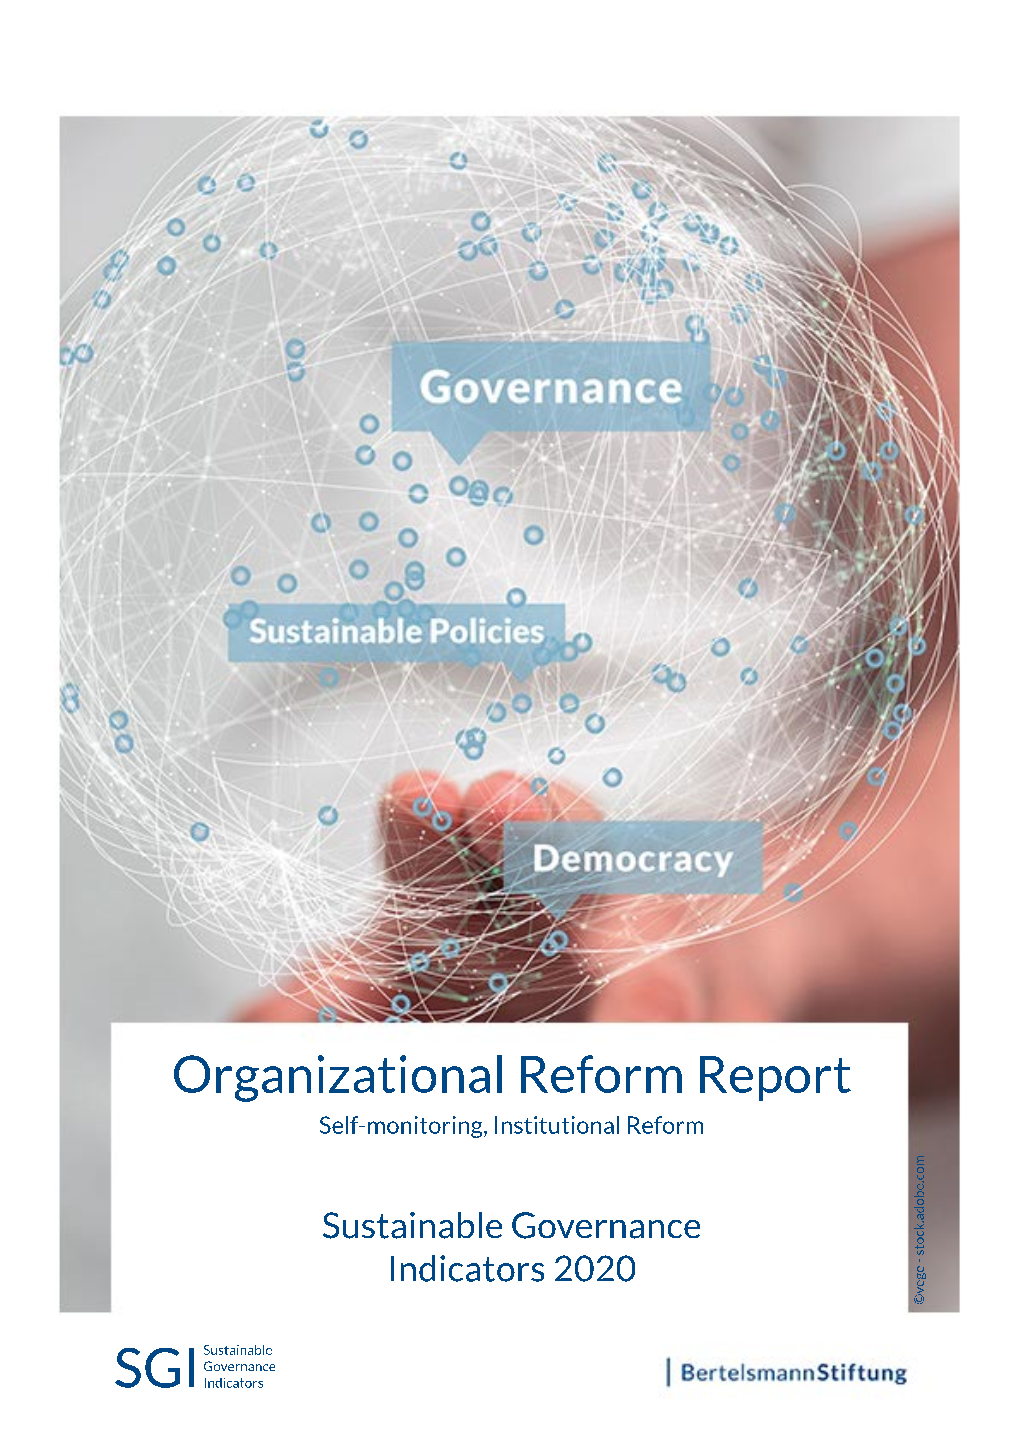 2020 Organizational Reform Report | SGI Sustainable Governance